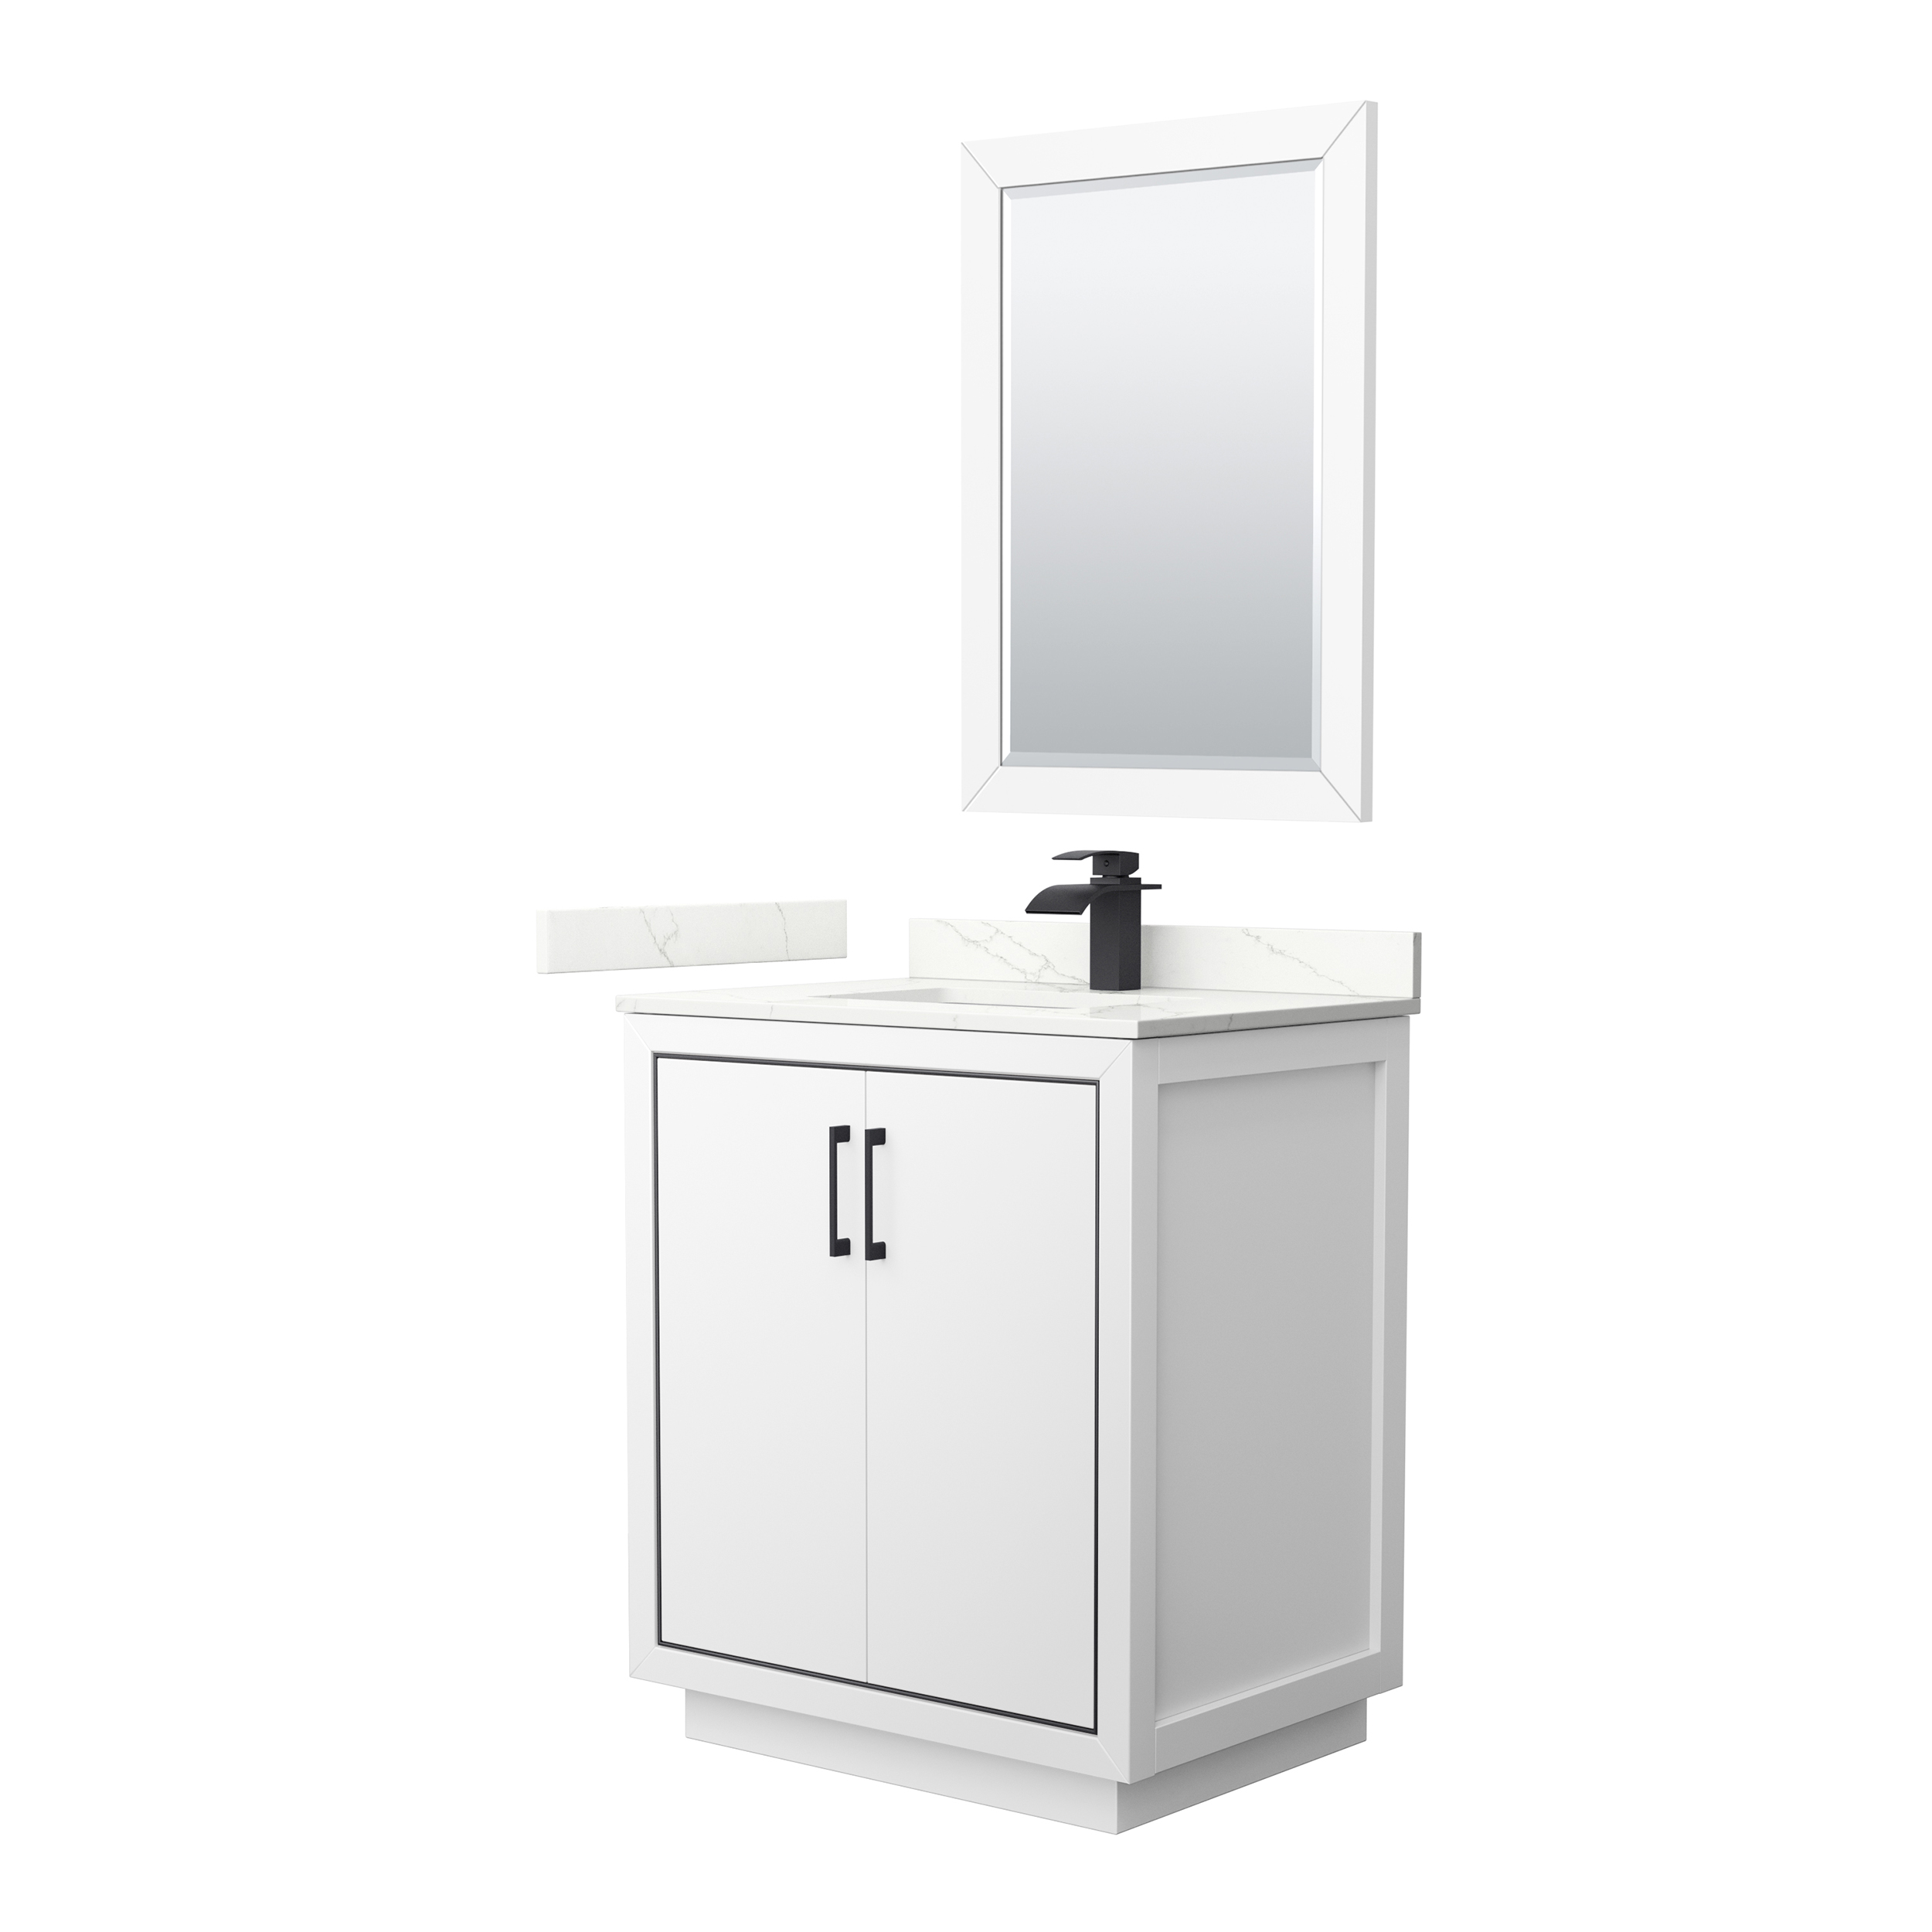 icon 30" single vanity with optional quartz or carrara marble counter - white